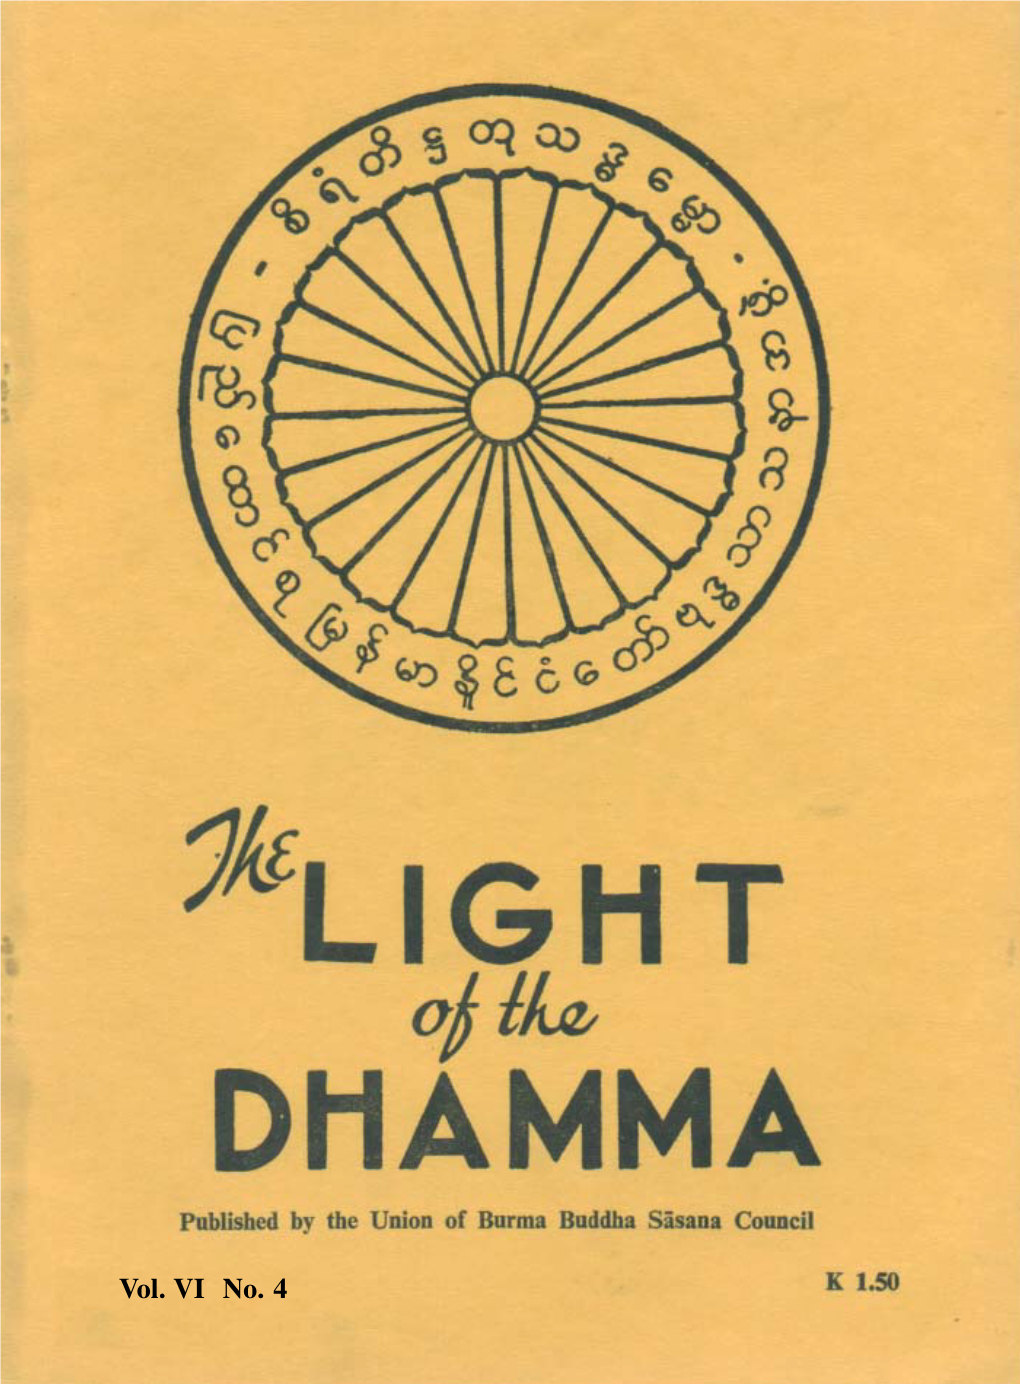 The Light of the Dhamma Vol VI No 4, October, 1959